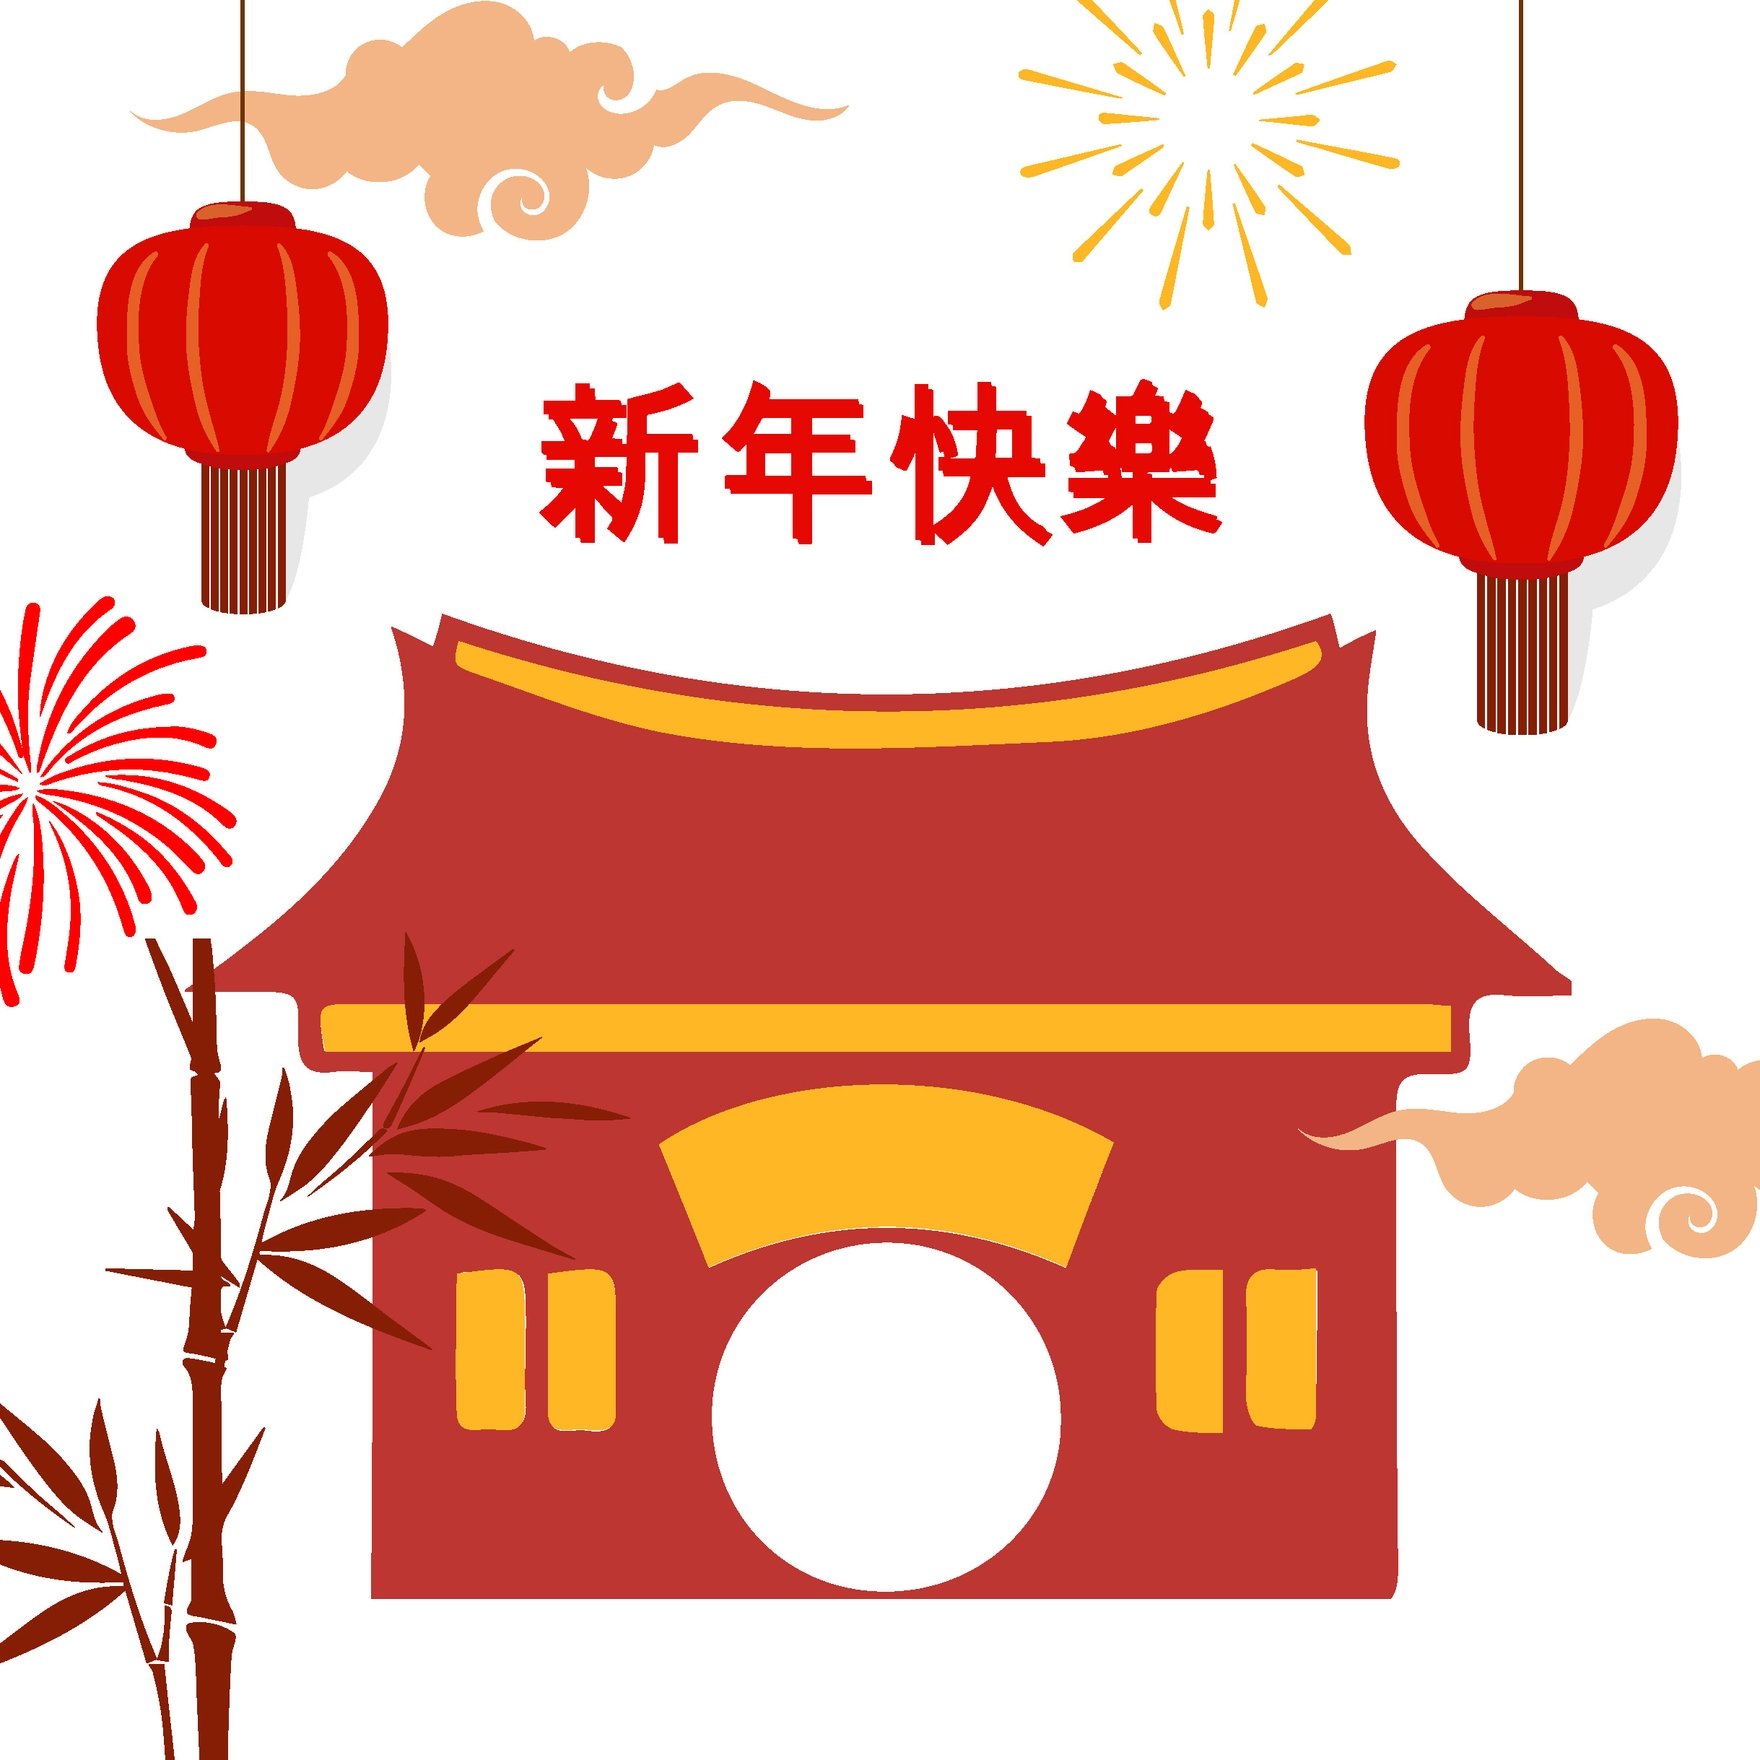 Chinese New Year Illustrator in Illustrator, PSD, EPS, SVG, JPG, PNG